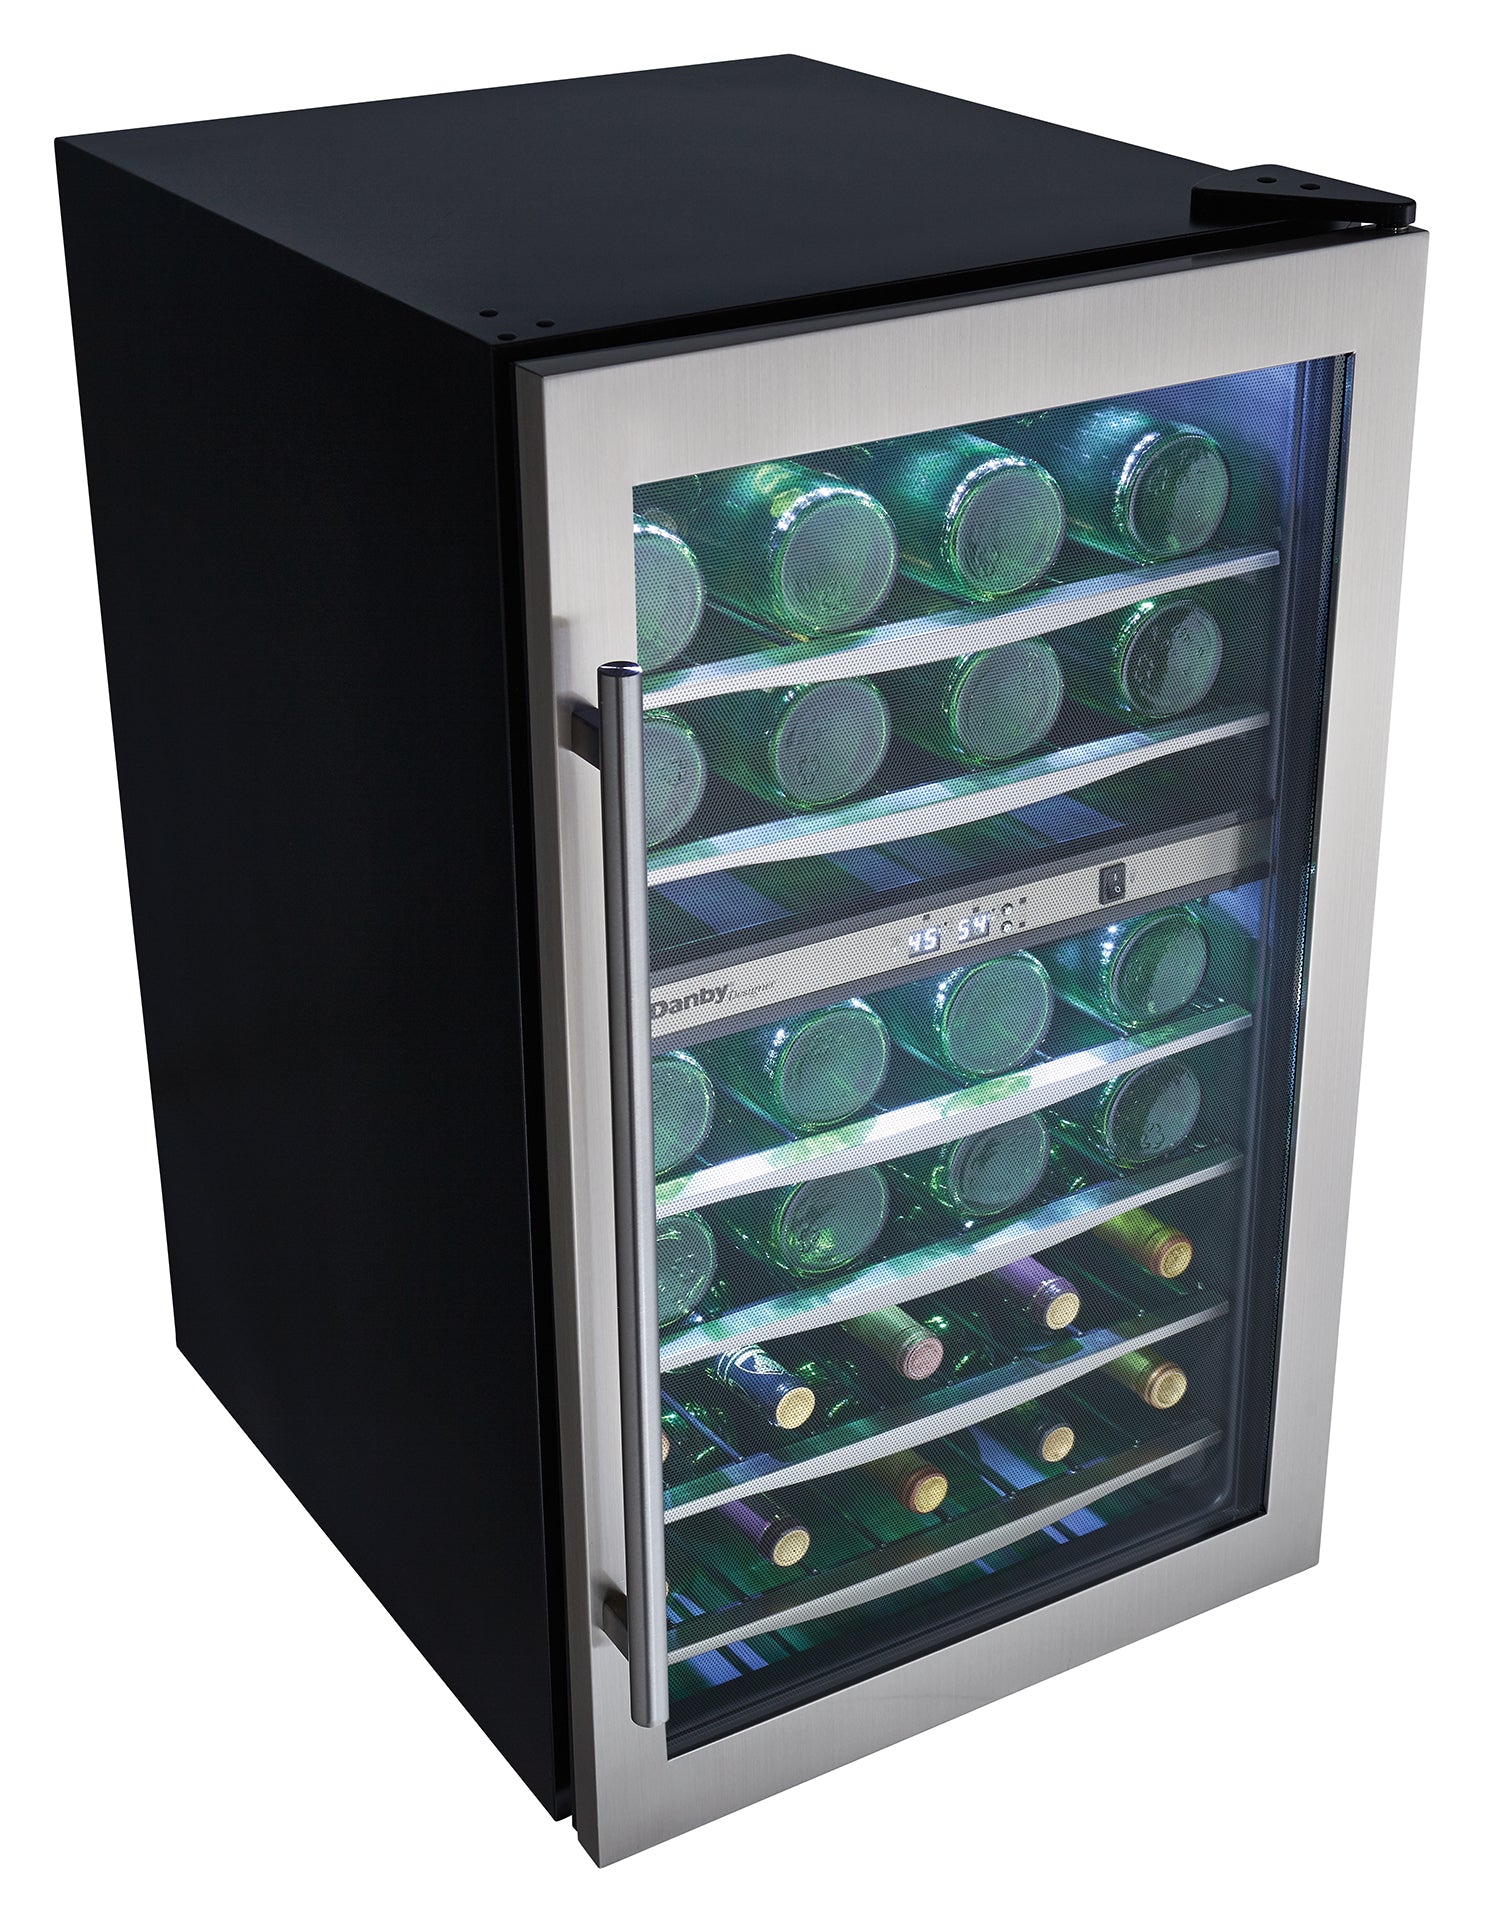 Danby - 19.4 Inch 38 Bottles cu. ft Wine Fridge Refrigerator in Stainless (Open Box) - DWC040A3BSSDD